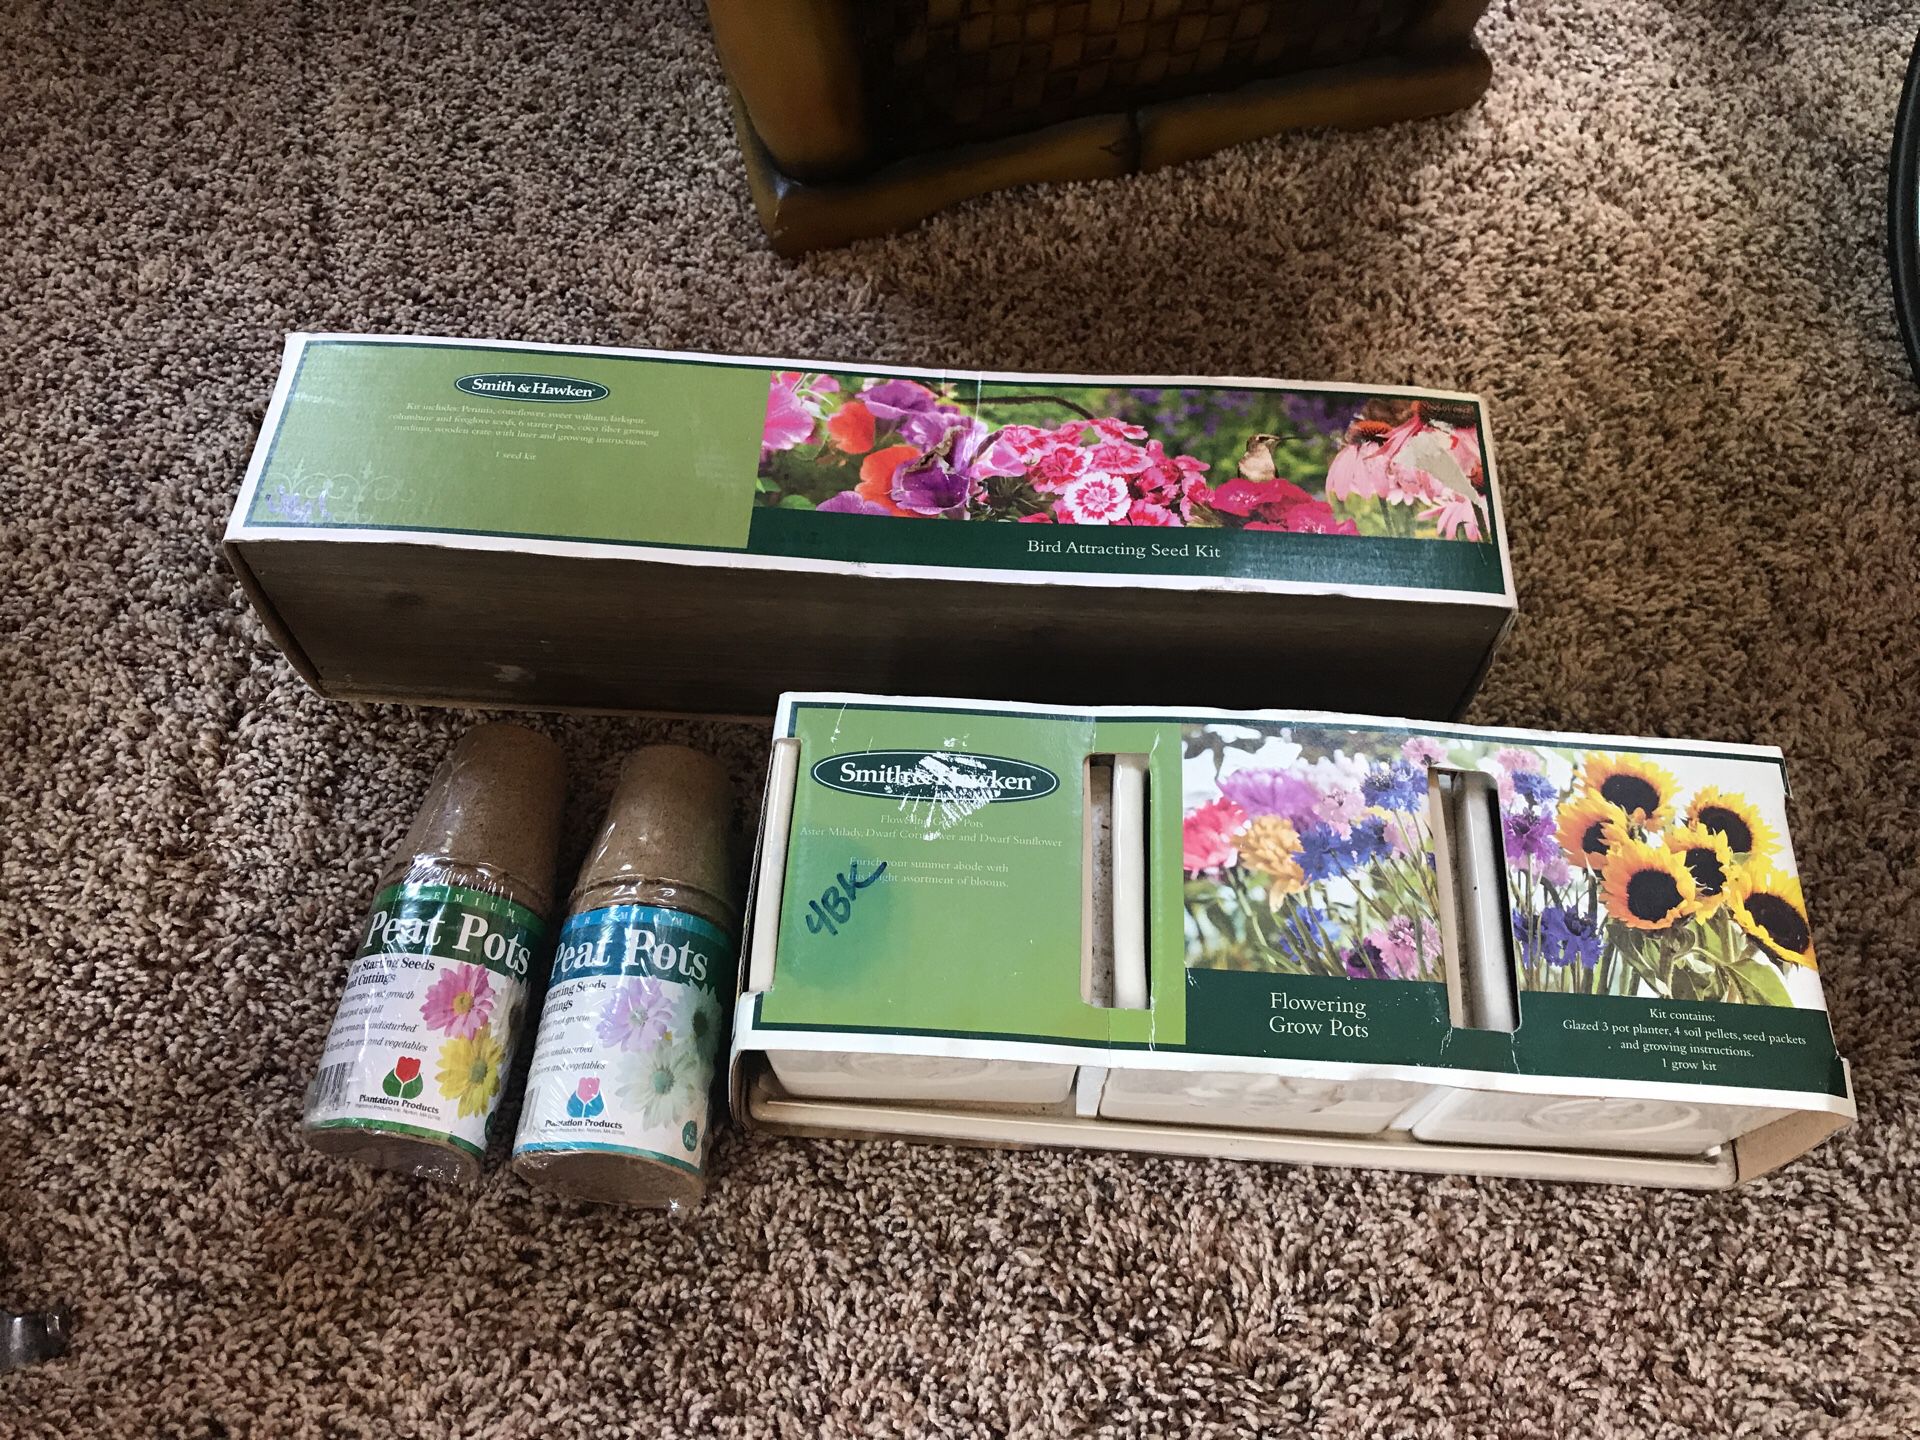 Smith & Hawken Bird Kit, Flowering Grow Pots & Peat Pots Never Used